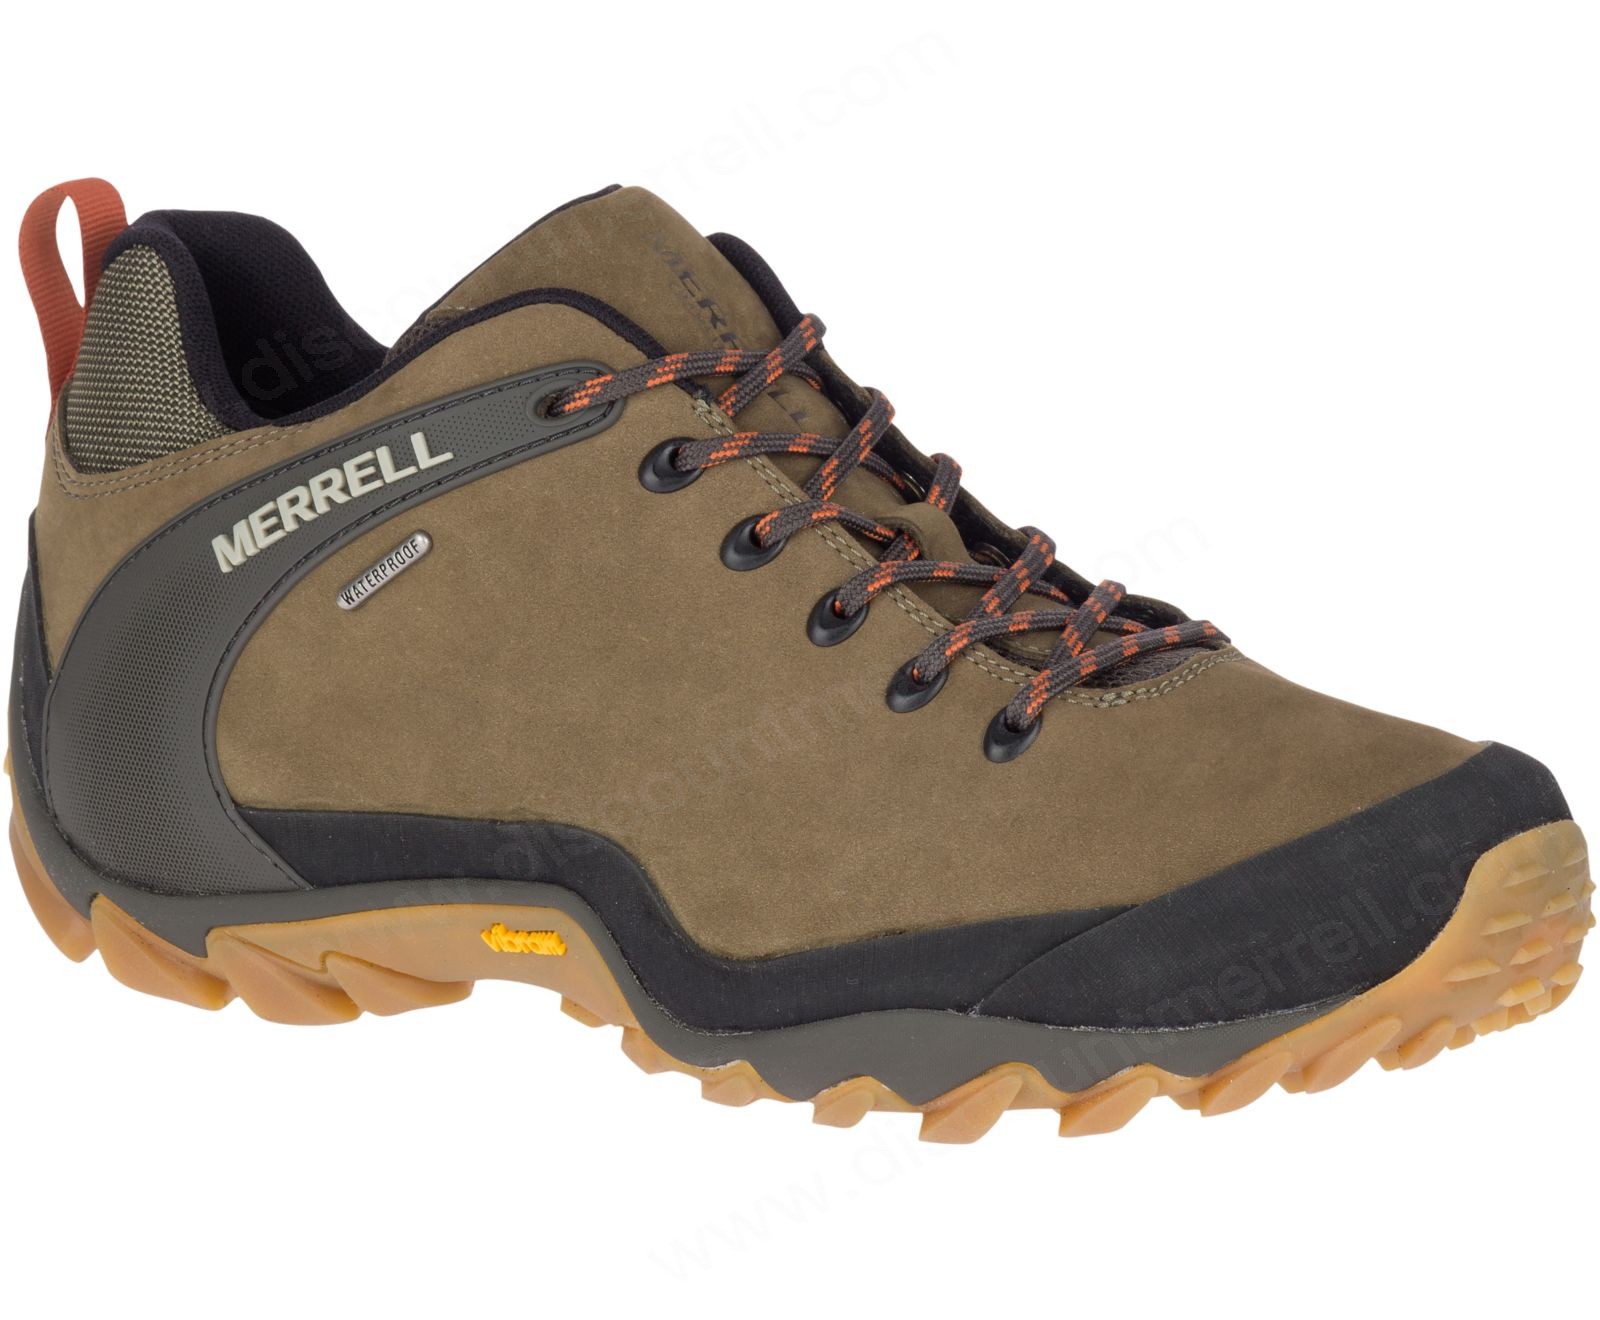 Merrell - Men's Chameleon 8 Leather Waterproof - Merrell - Men's Chameleon 8 Leather Waterproof